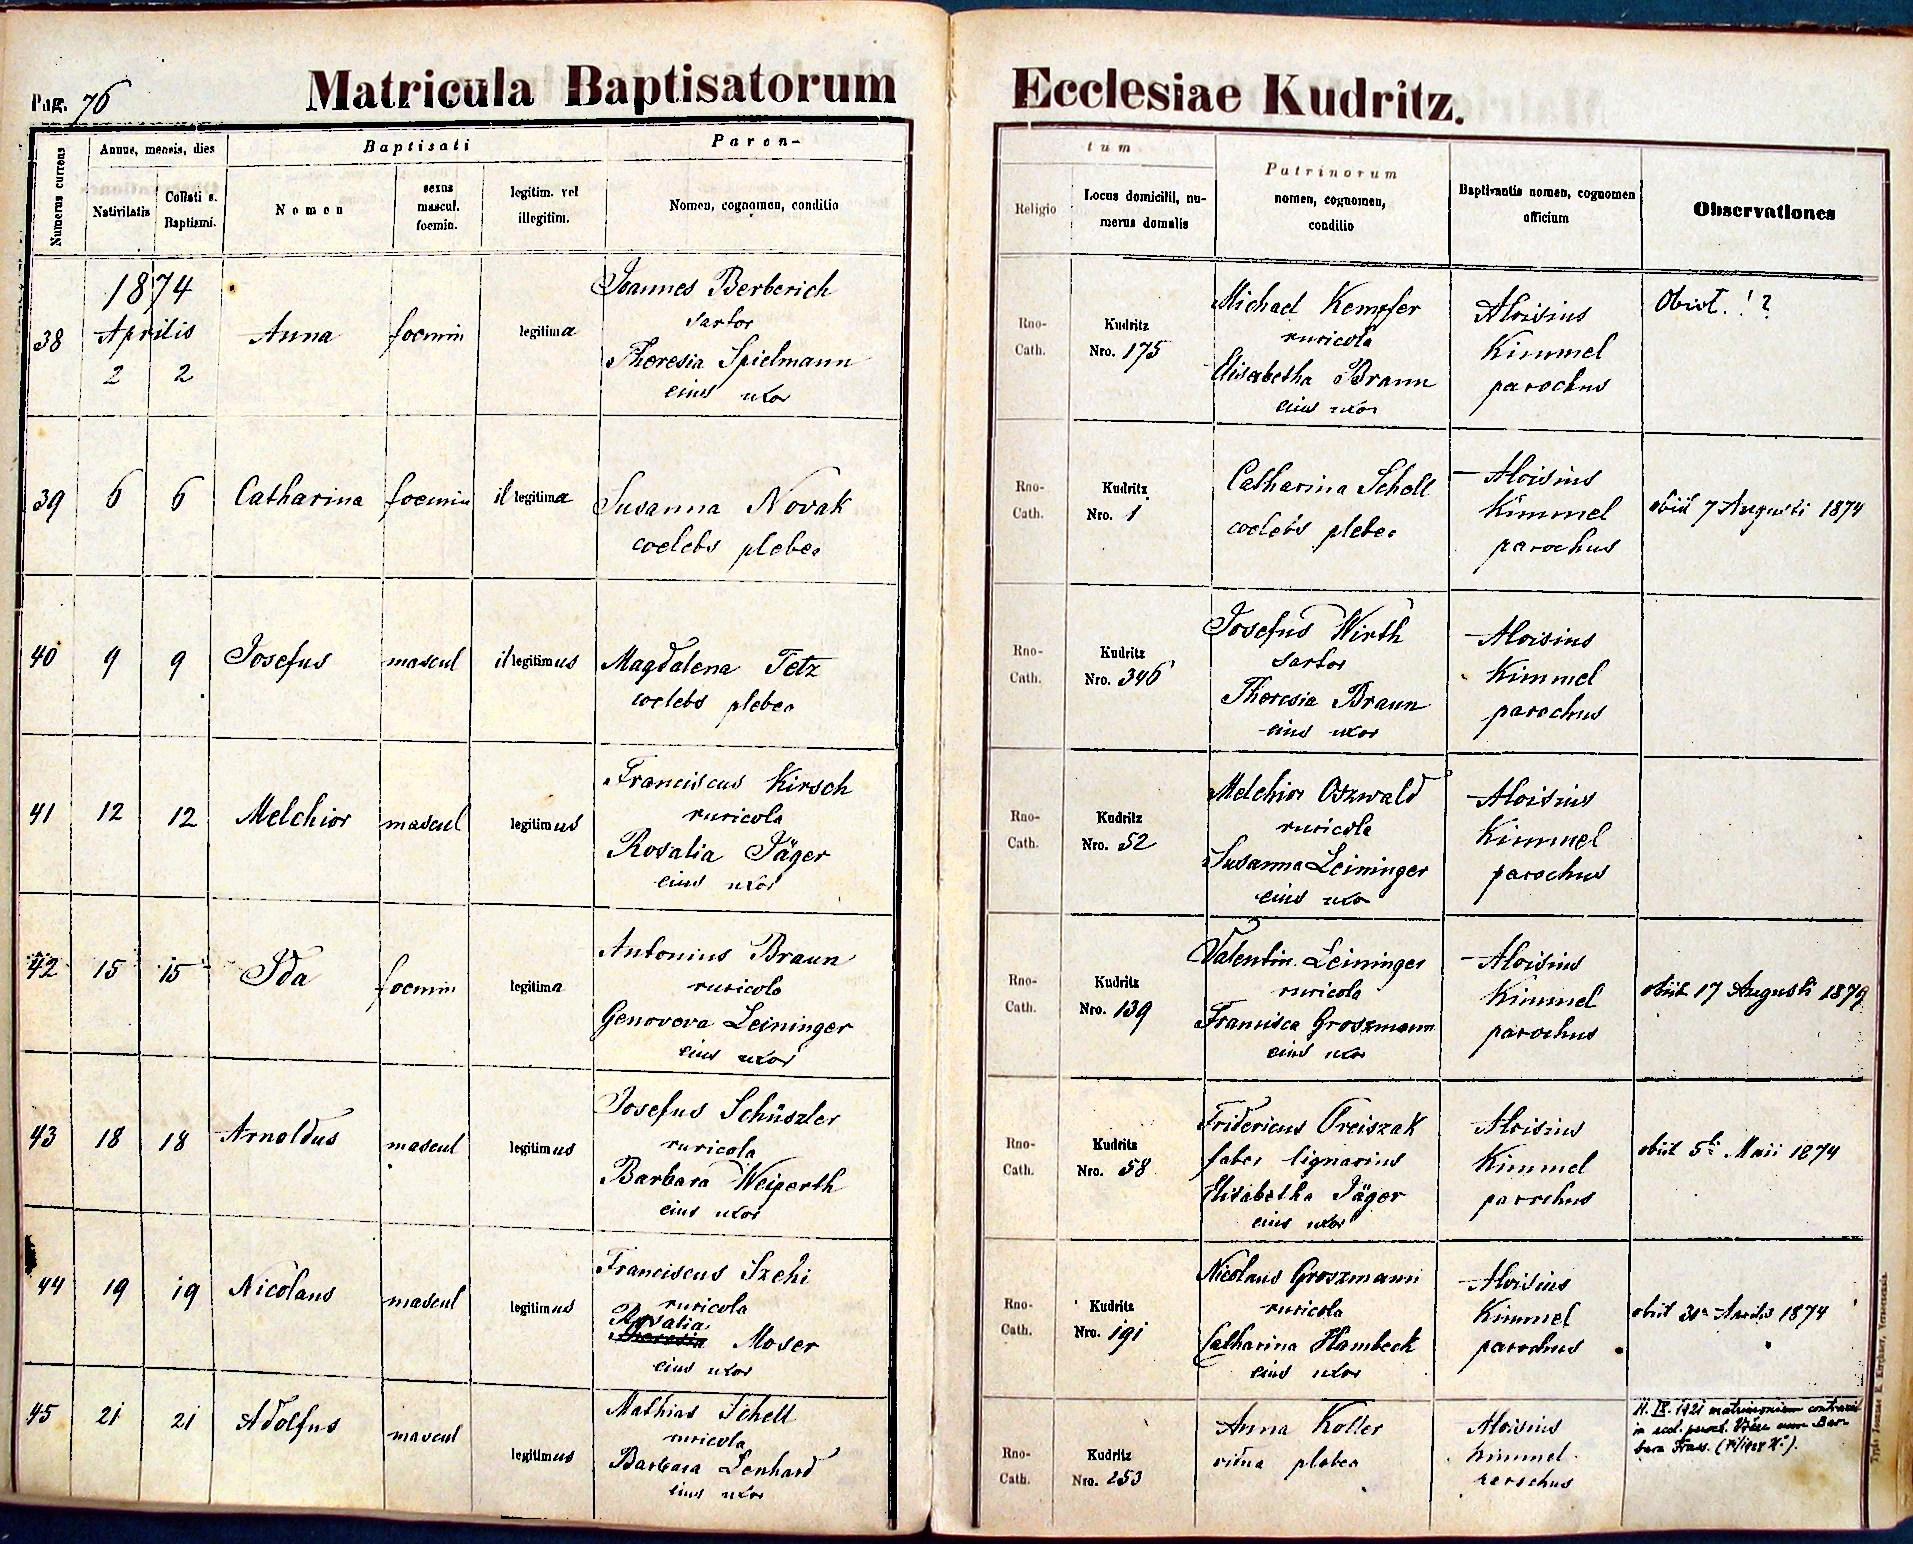 images/church_records/BIRTHS/1884-1899B/1888/076